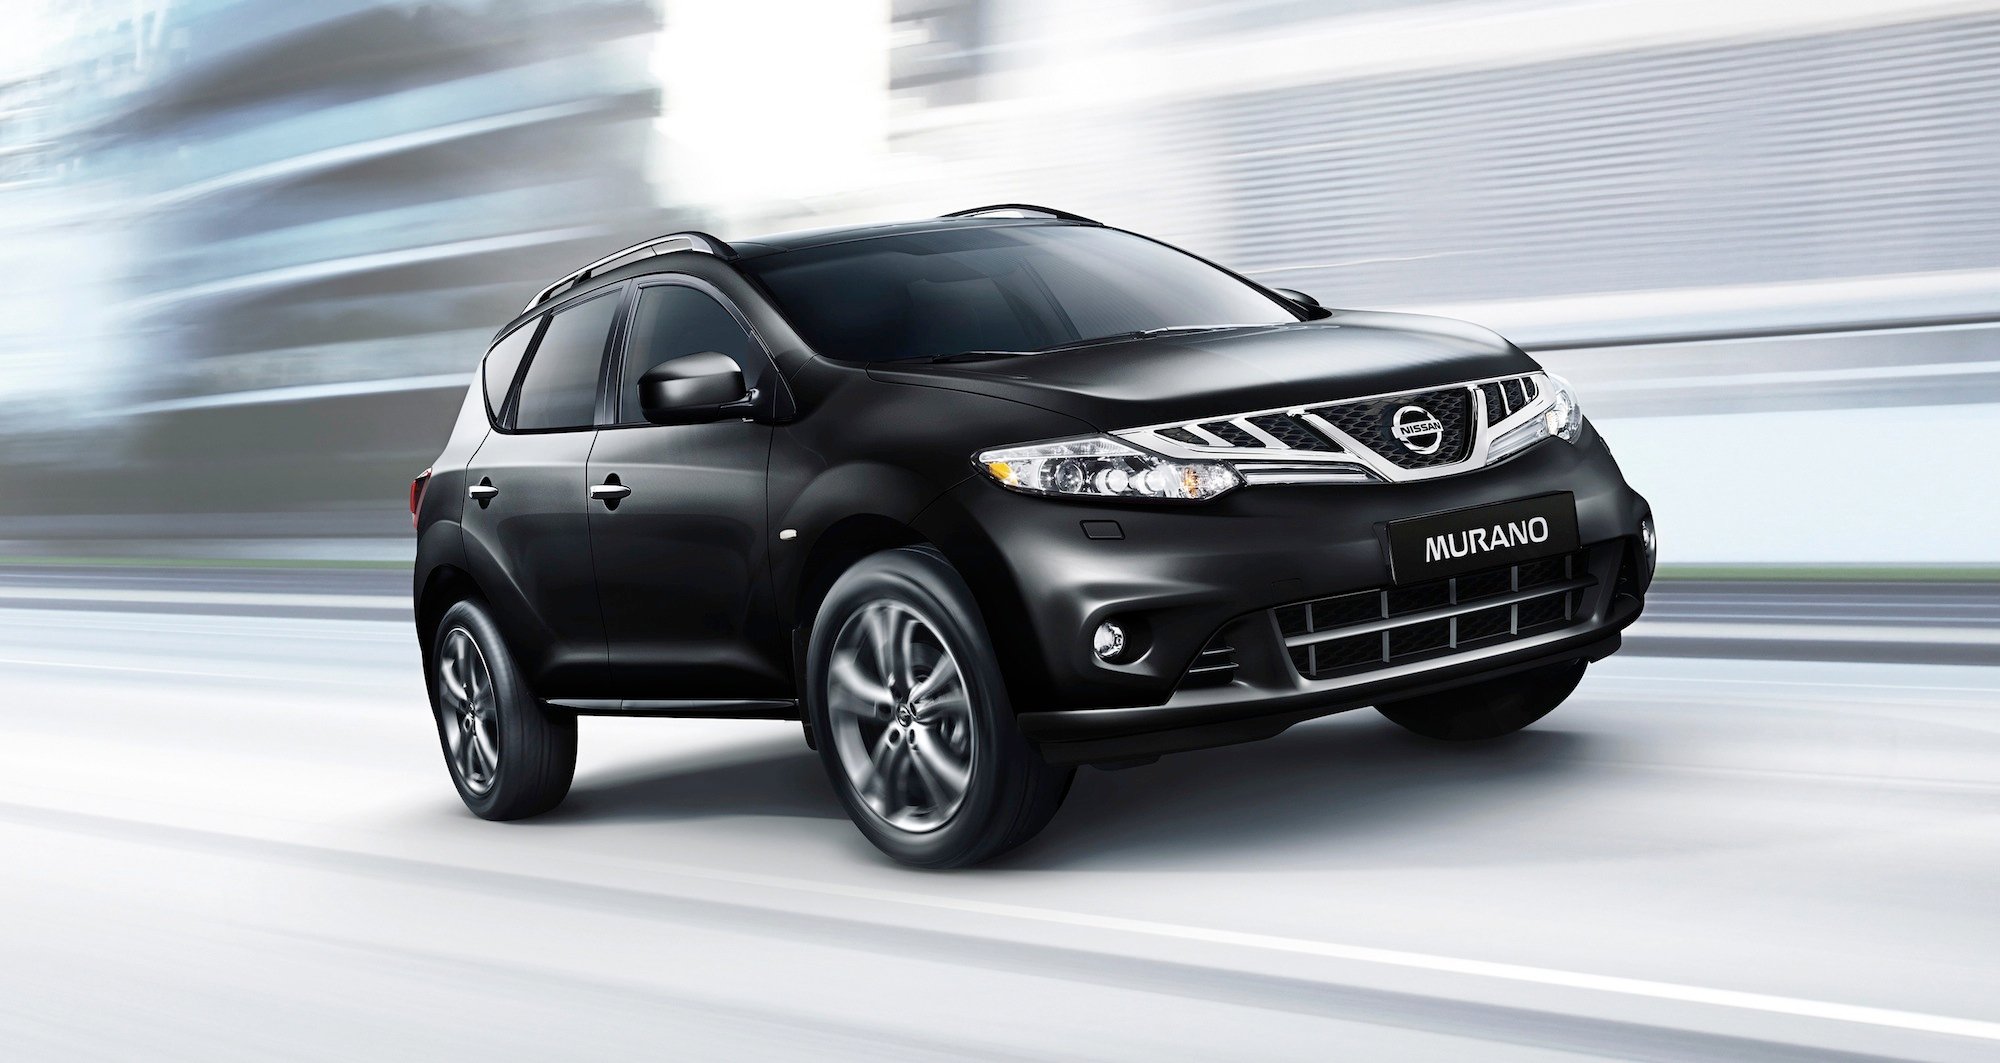 2014 Nissan Murano gets safety upgrades - photos | CarAdvice
